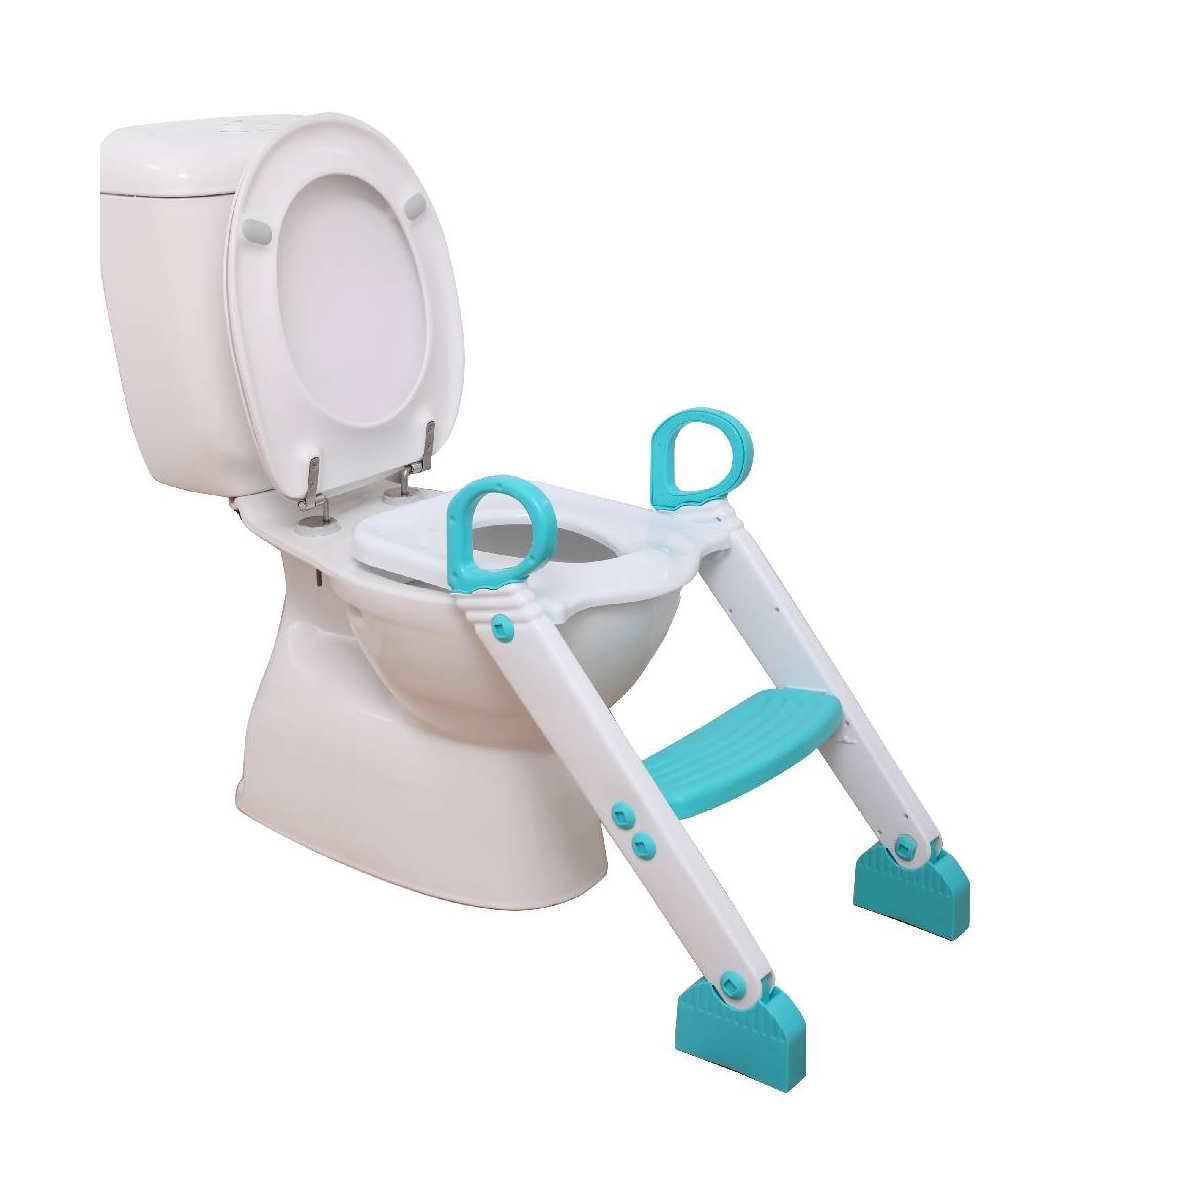 Dreambaby Step-up Toilet Trainer